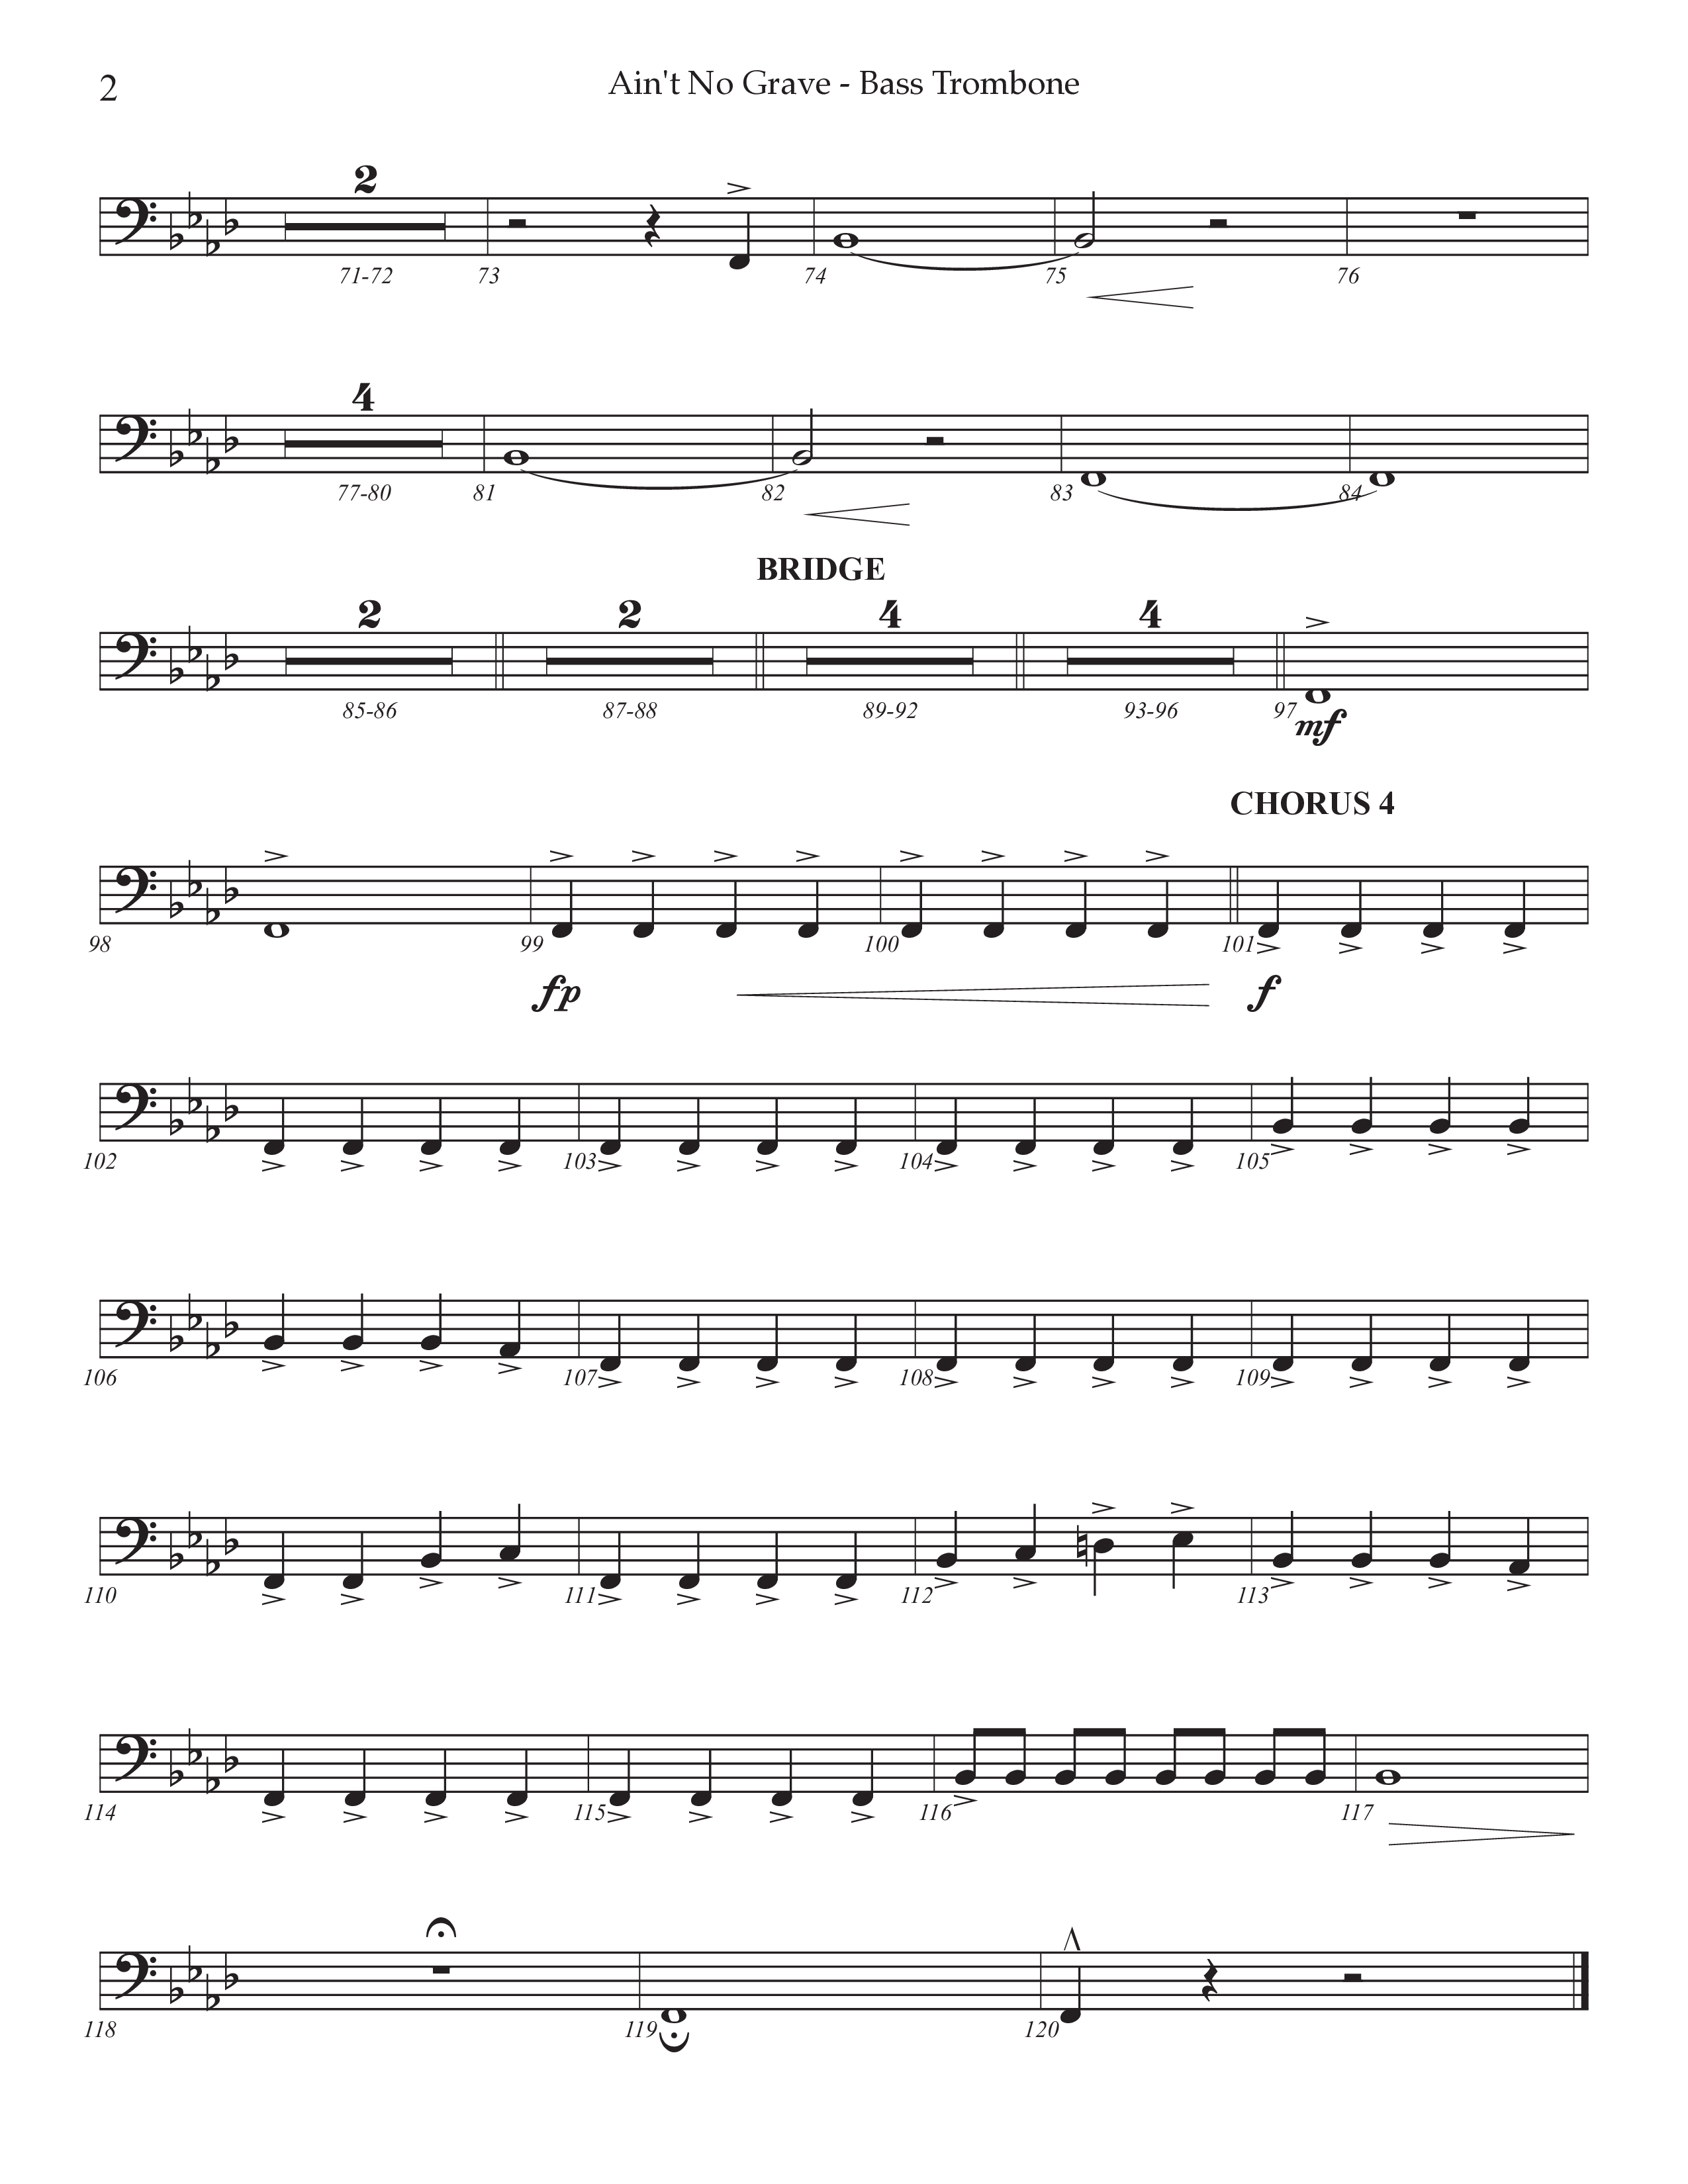 Ain't No Grave (Choral Anthem SATB) Bass Trombone (Prestonwood Choir / Prestonwood Worship / Arr. Jonathan Walker)